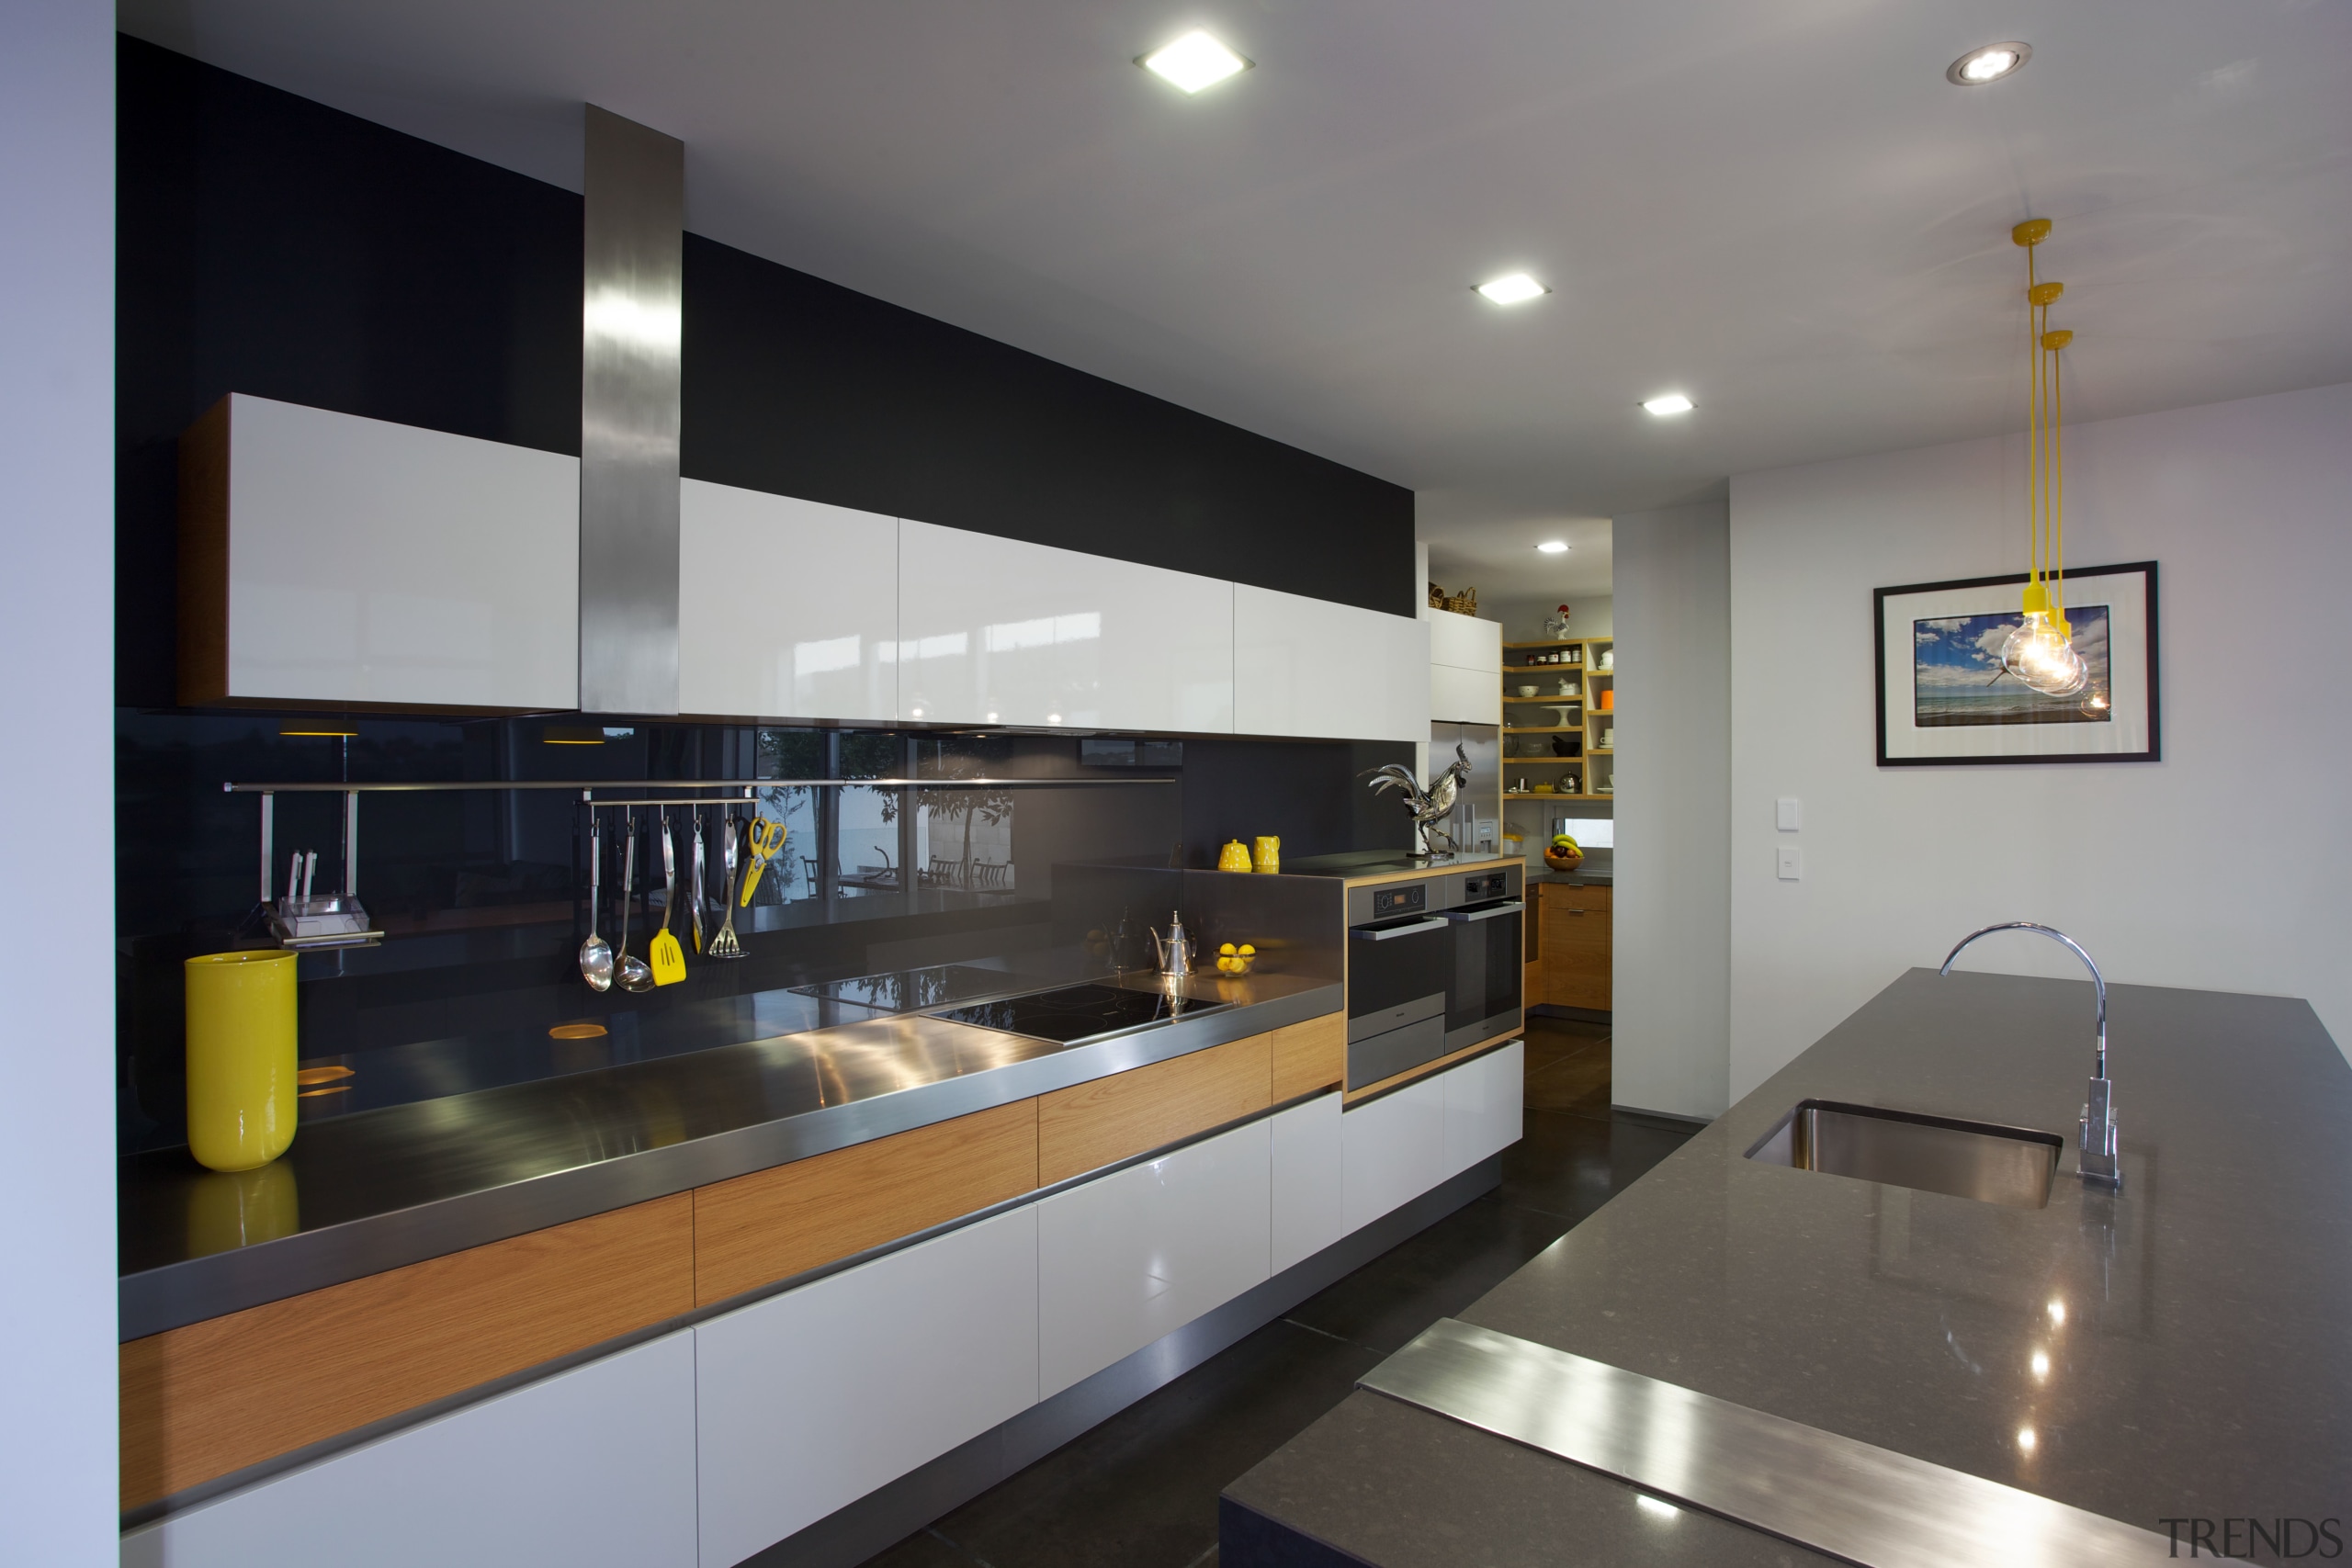 This kitchen designed by Melanie Craig Design features countertop, interior design, kitchen, real estate, gray, black